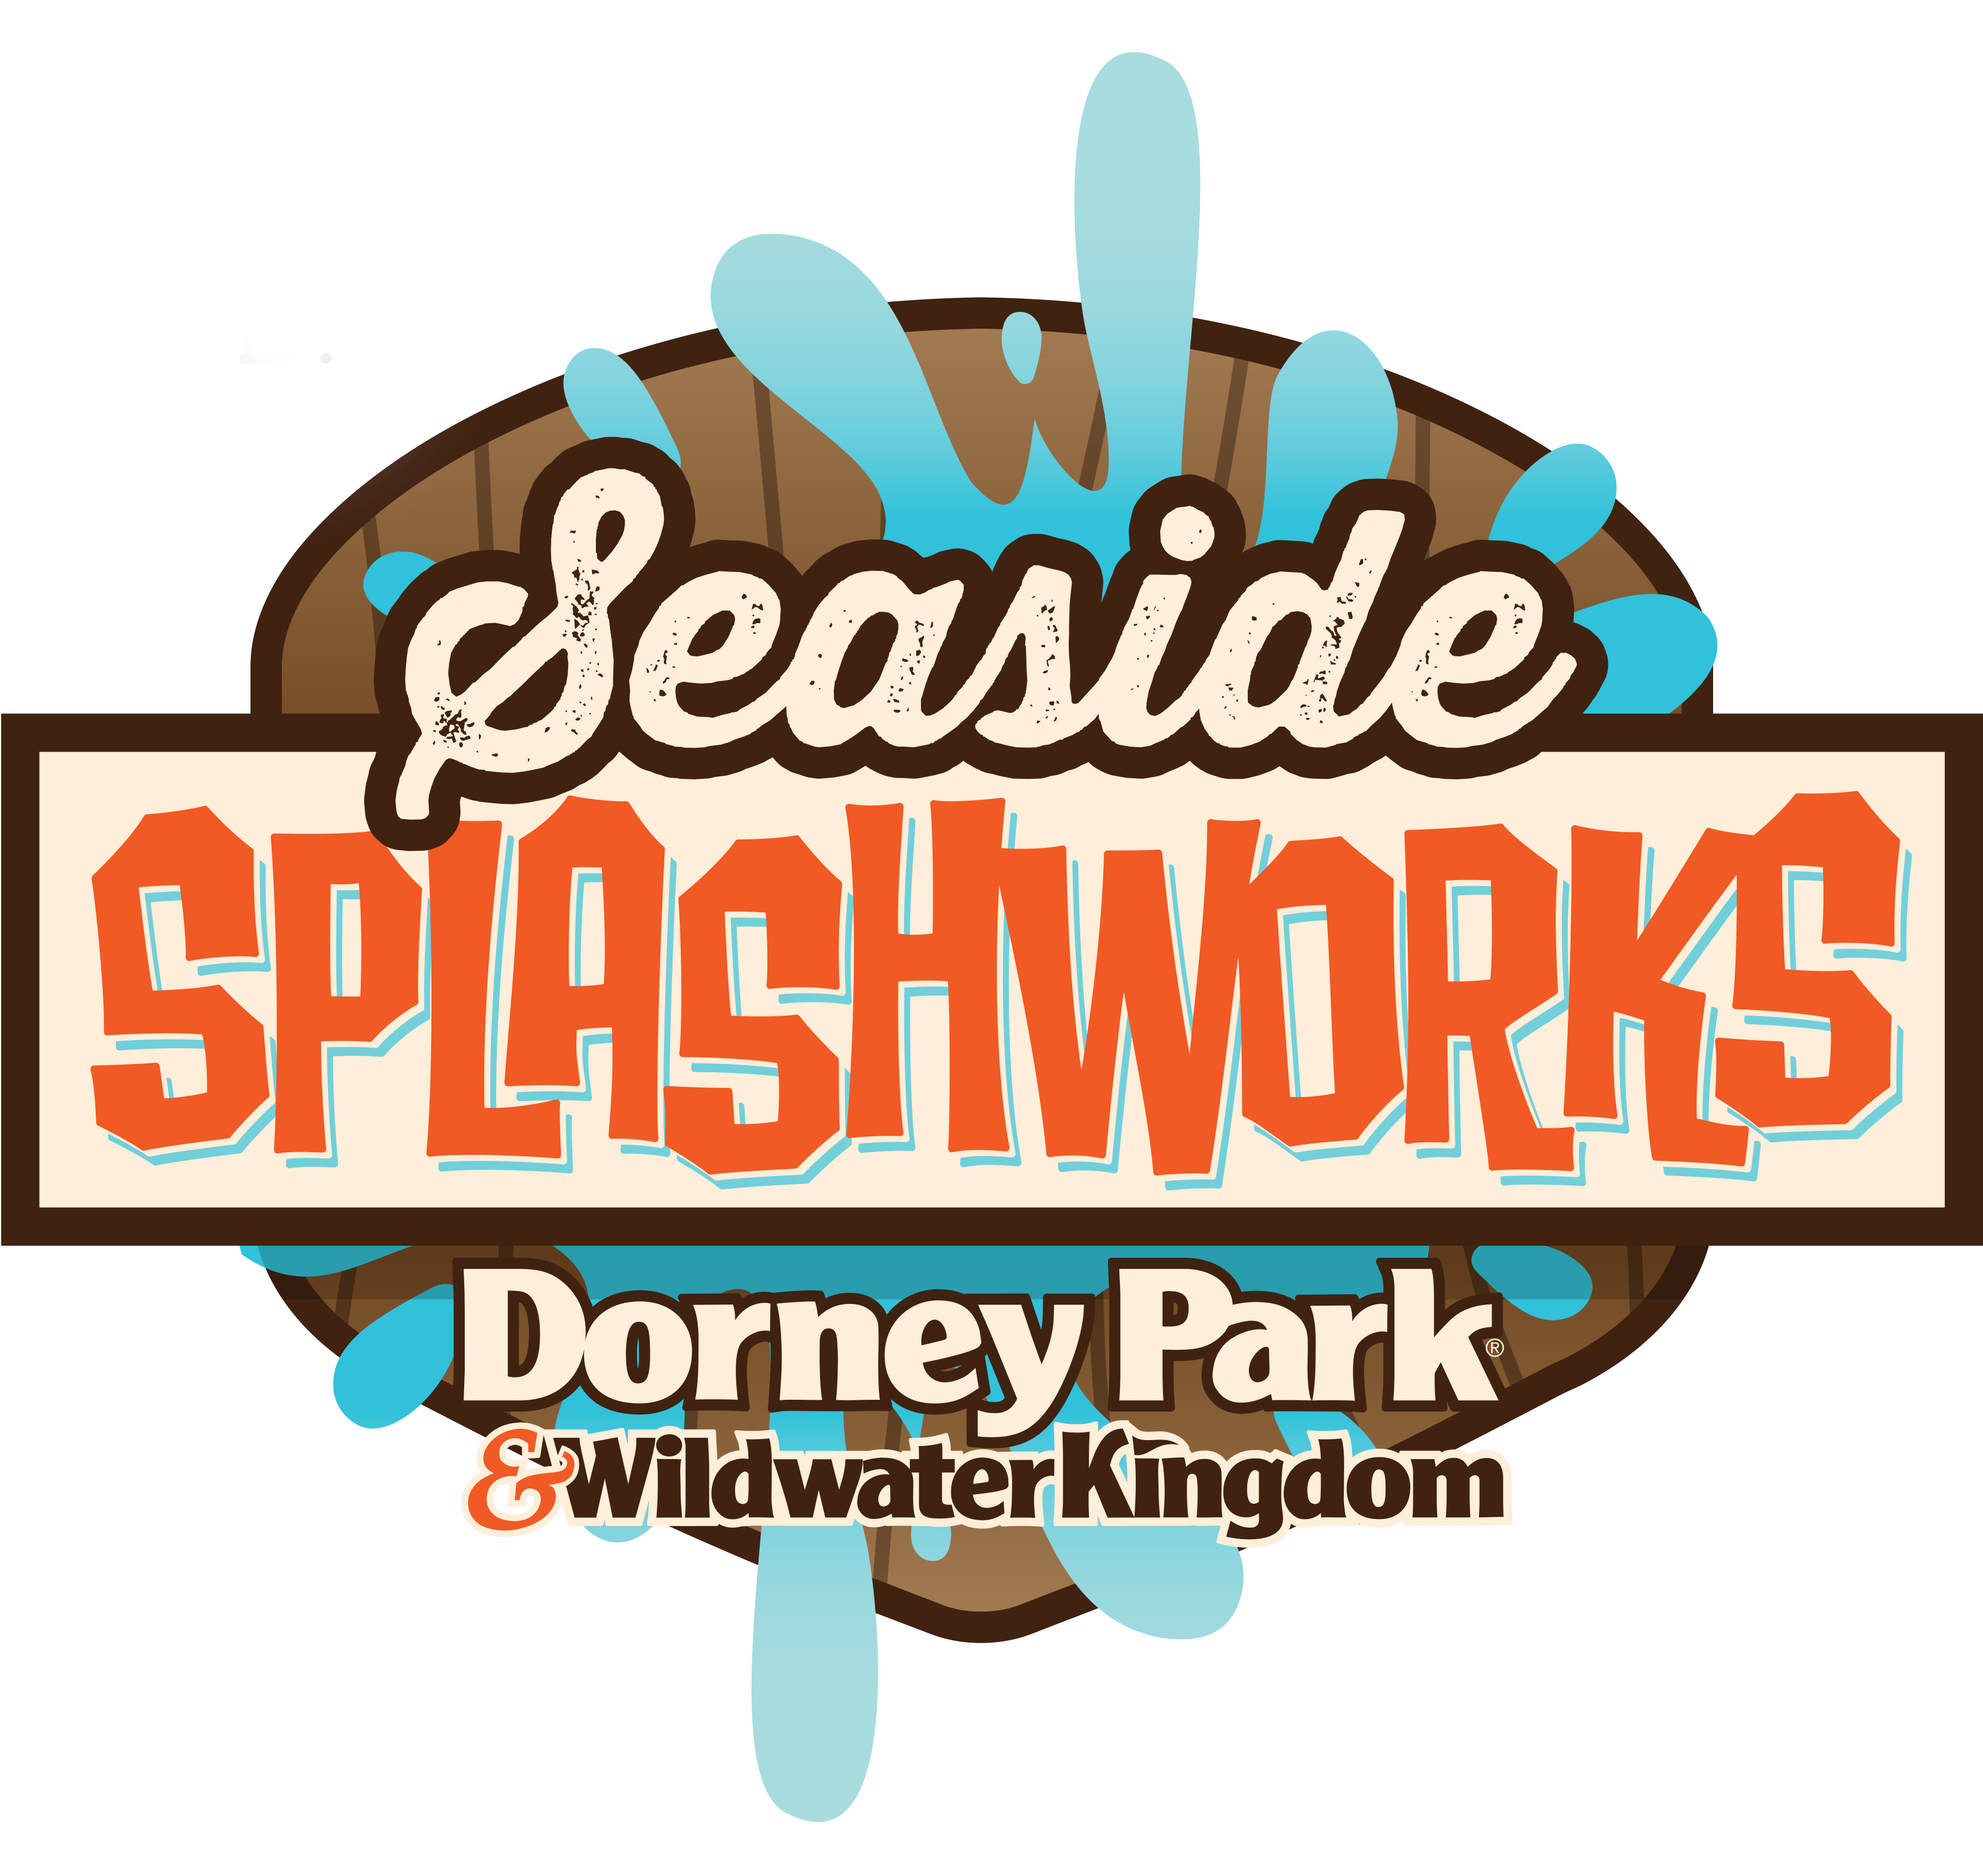 Seaside Splashworks LOGO
New in 2020 at Dorney Park & Wildwater Kingdom